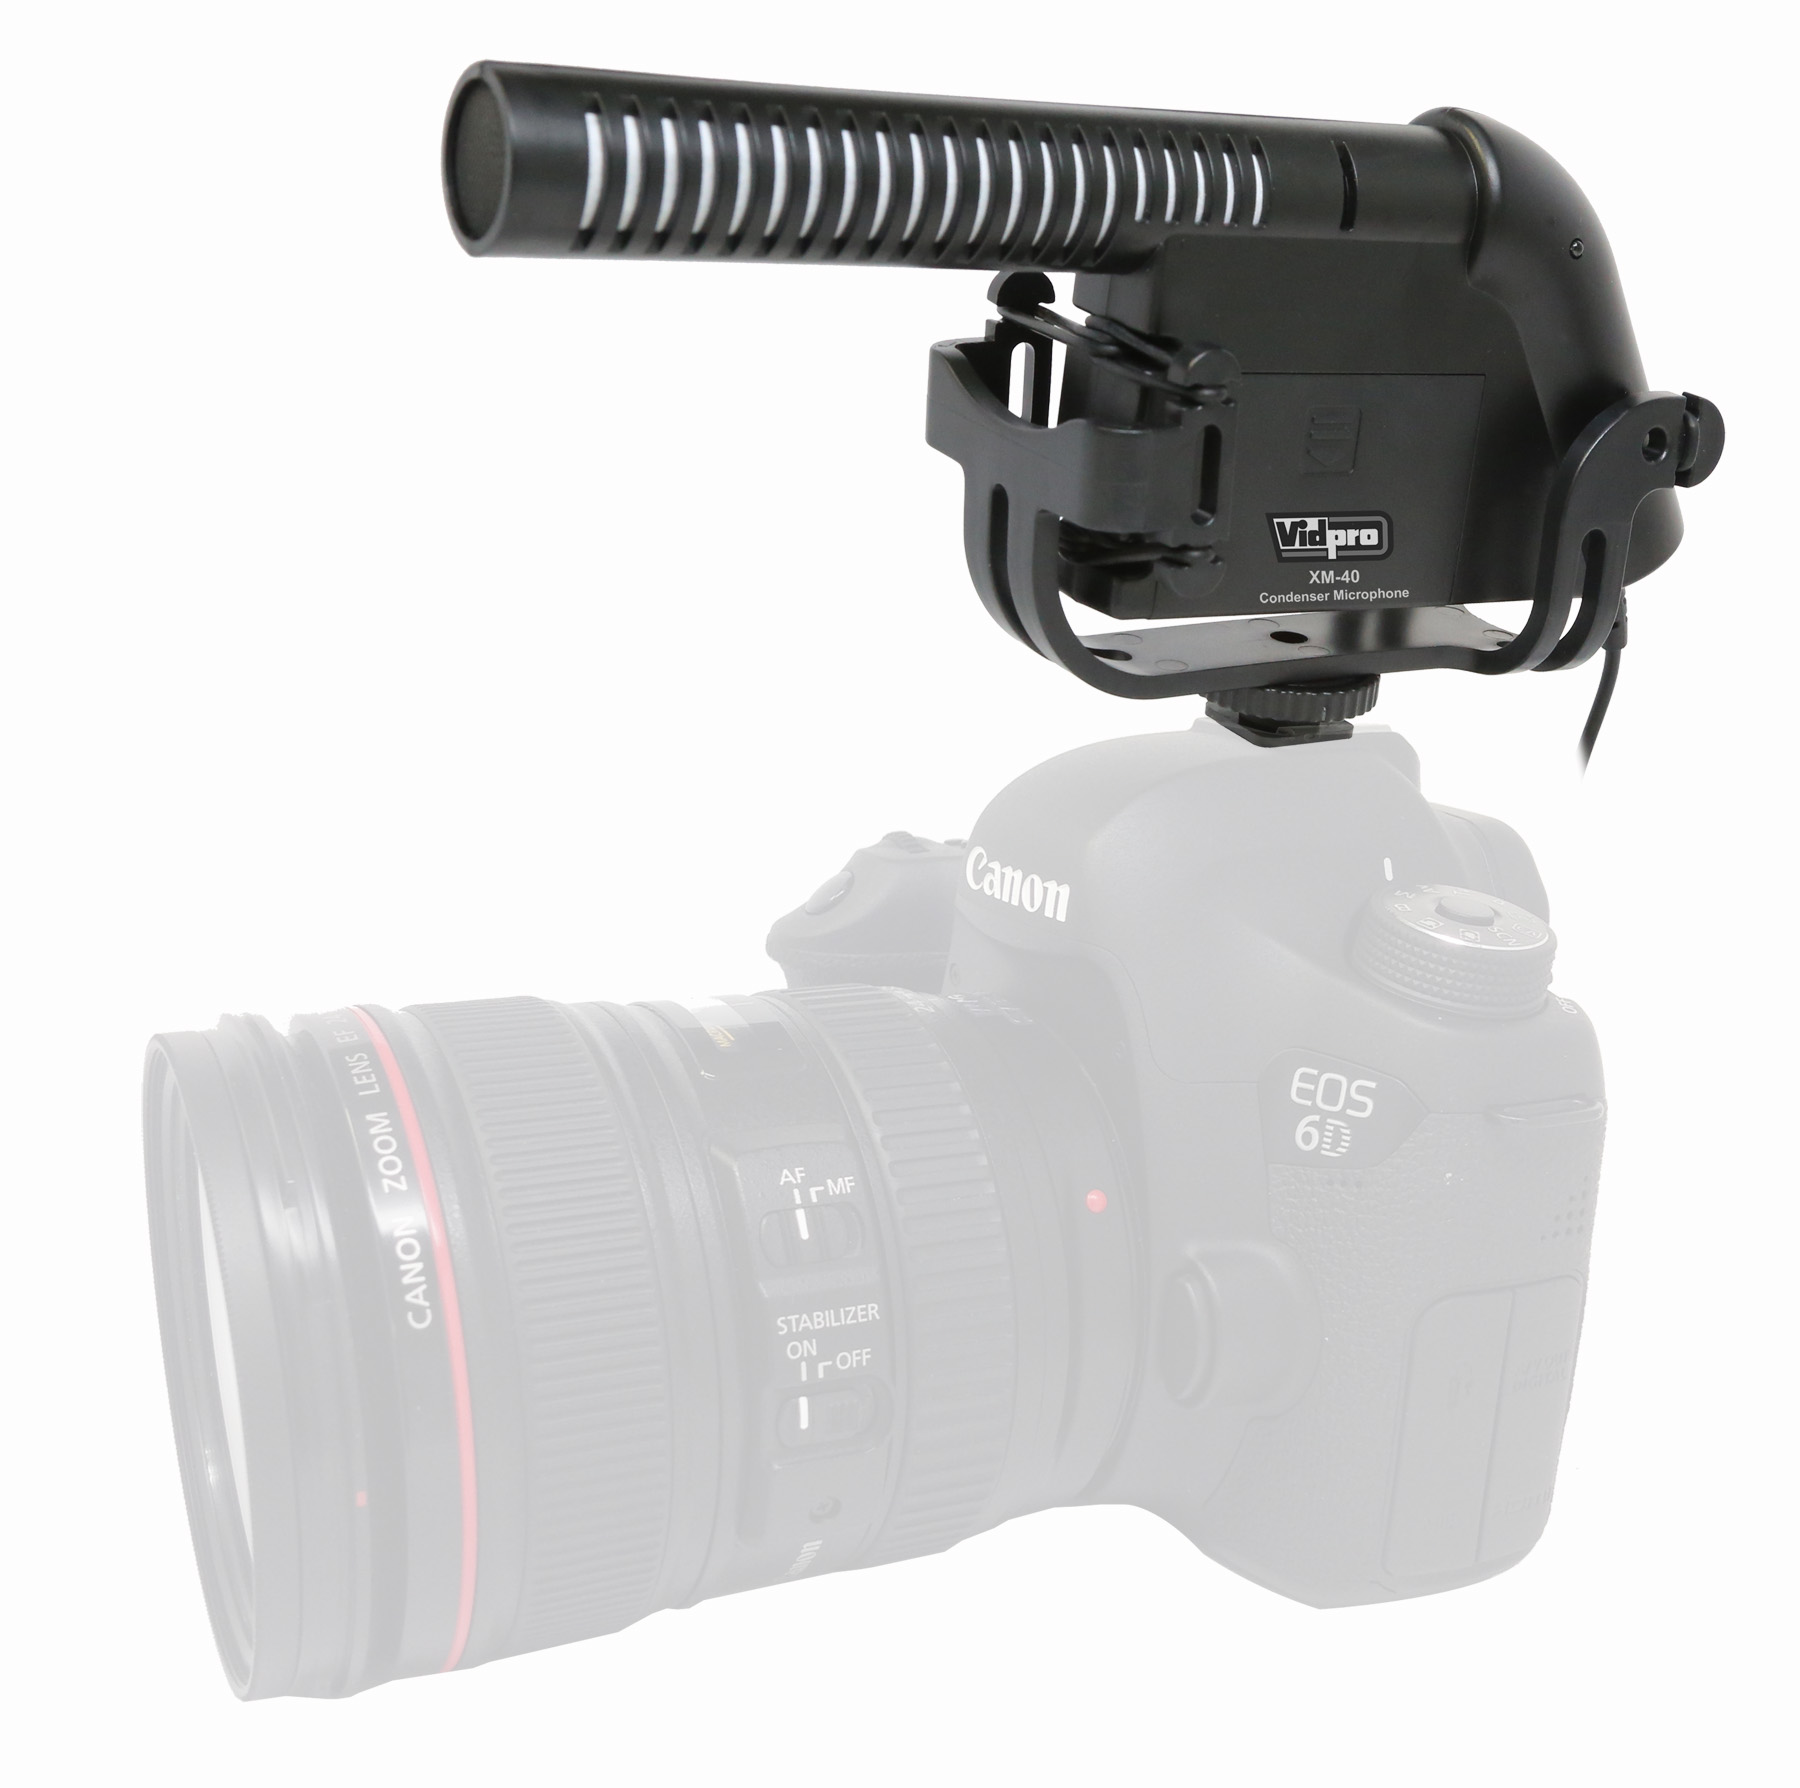 External Microphone for NikonDigital Camera